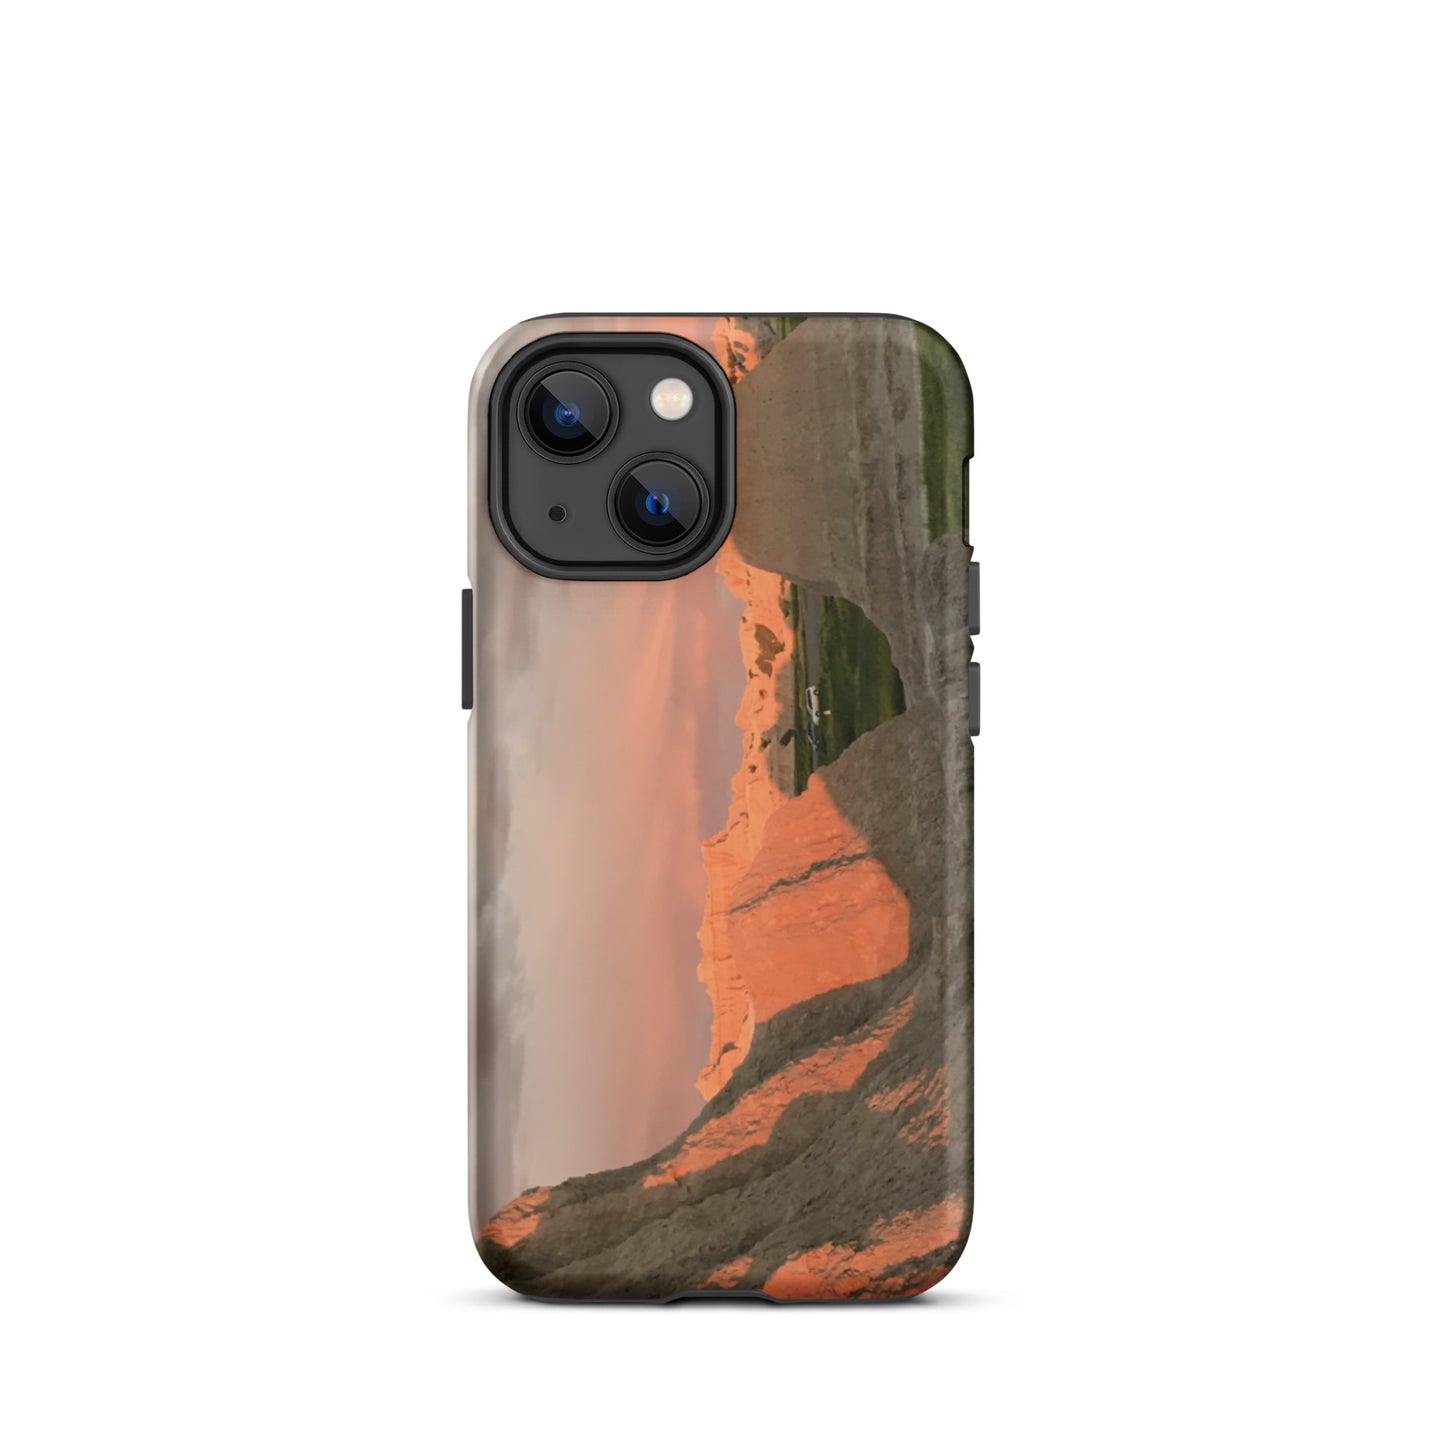 Badlands Tough iPhone case